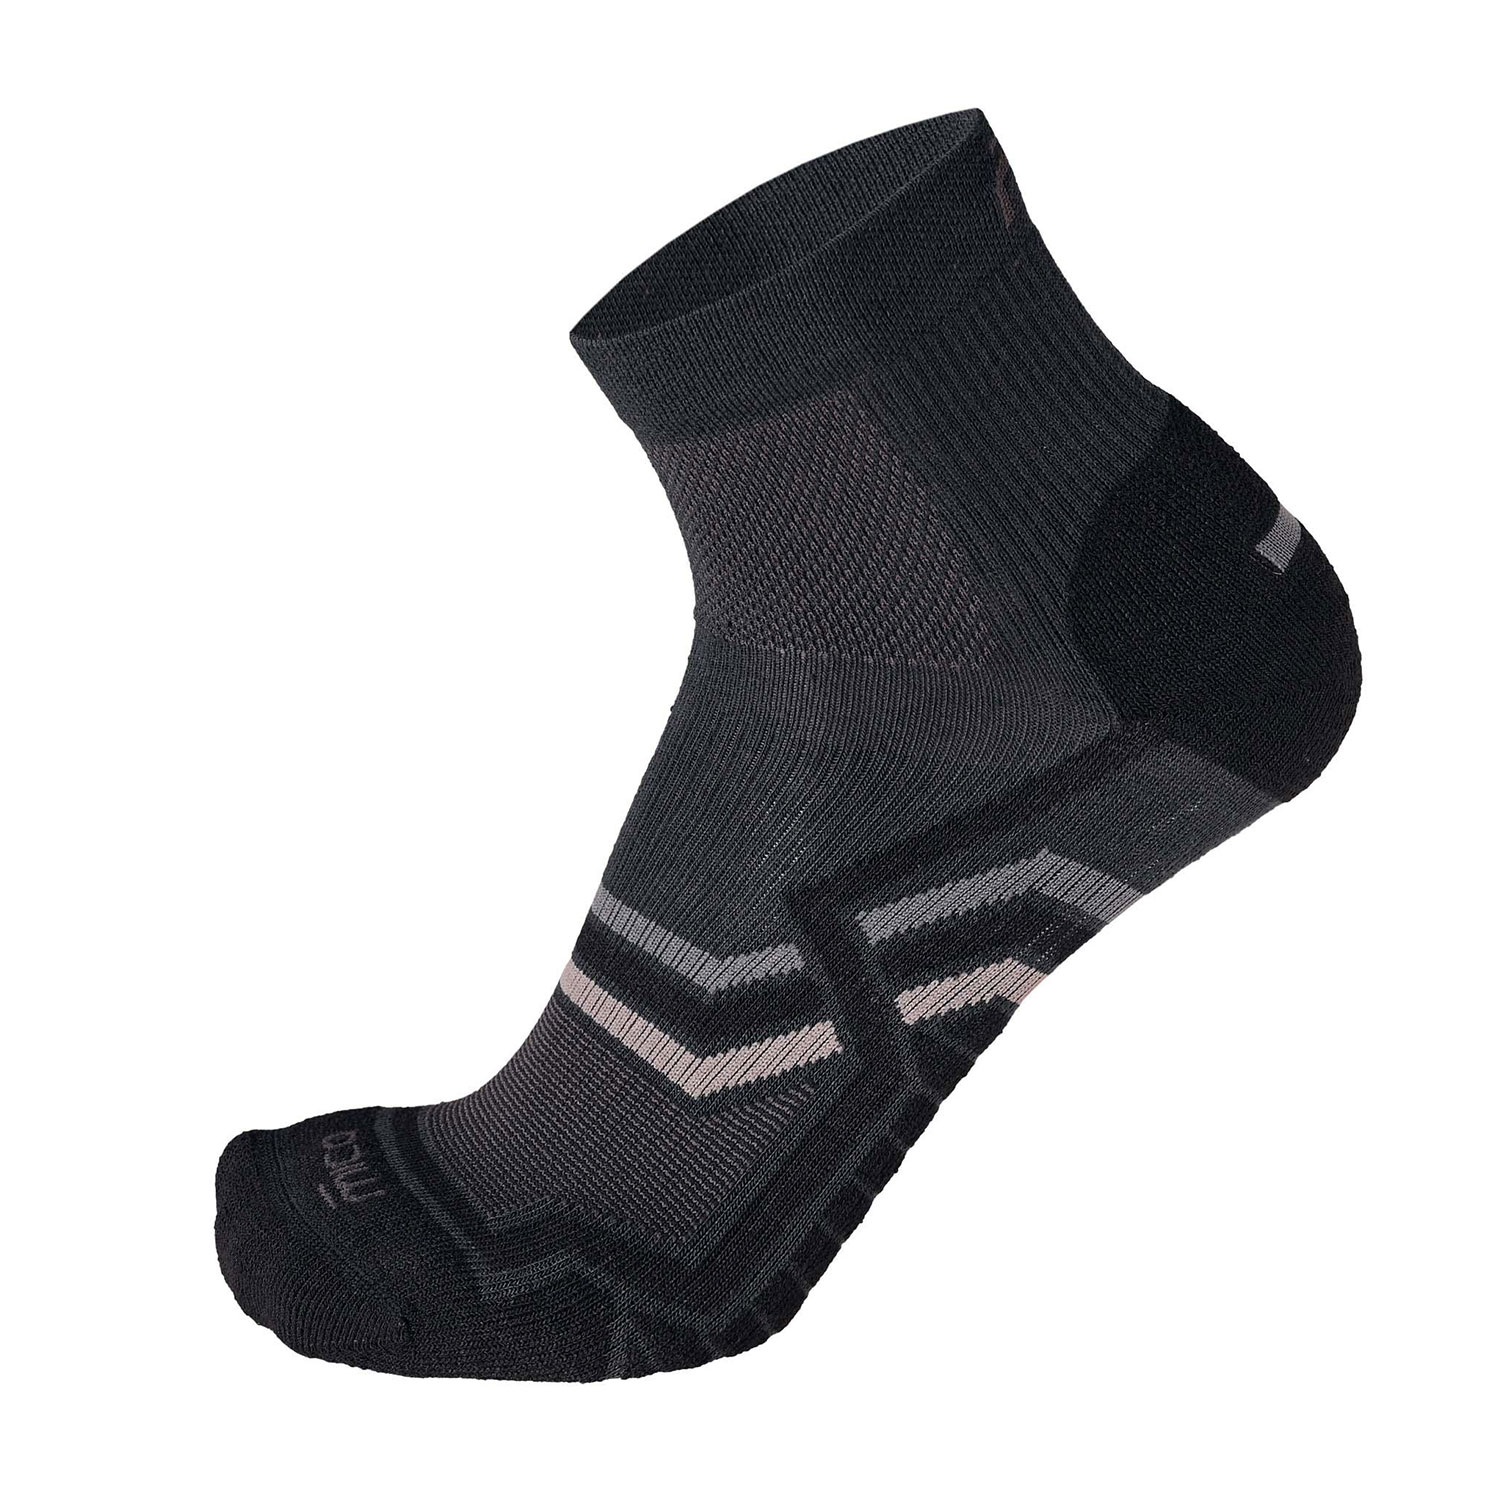 Mico Extra Dry Light Weight Hiking Socks - Antracite Melange